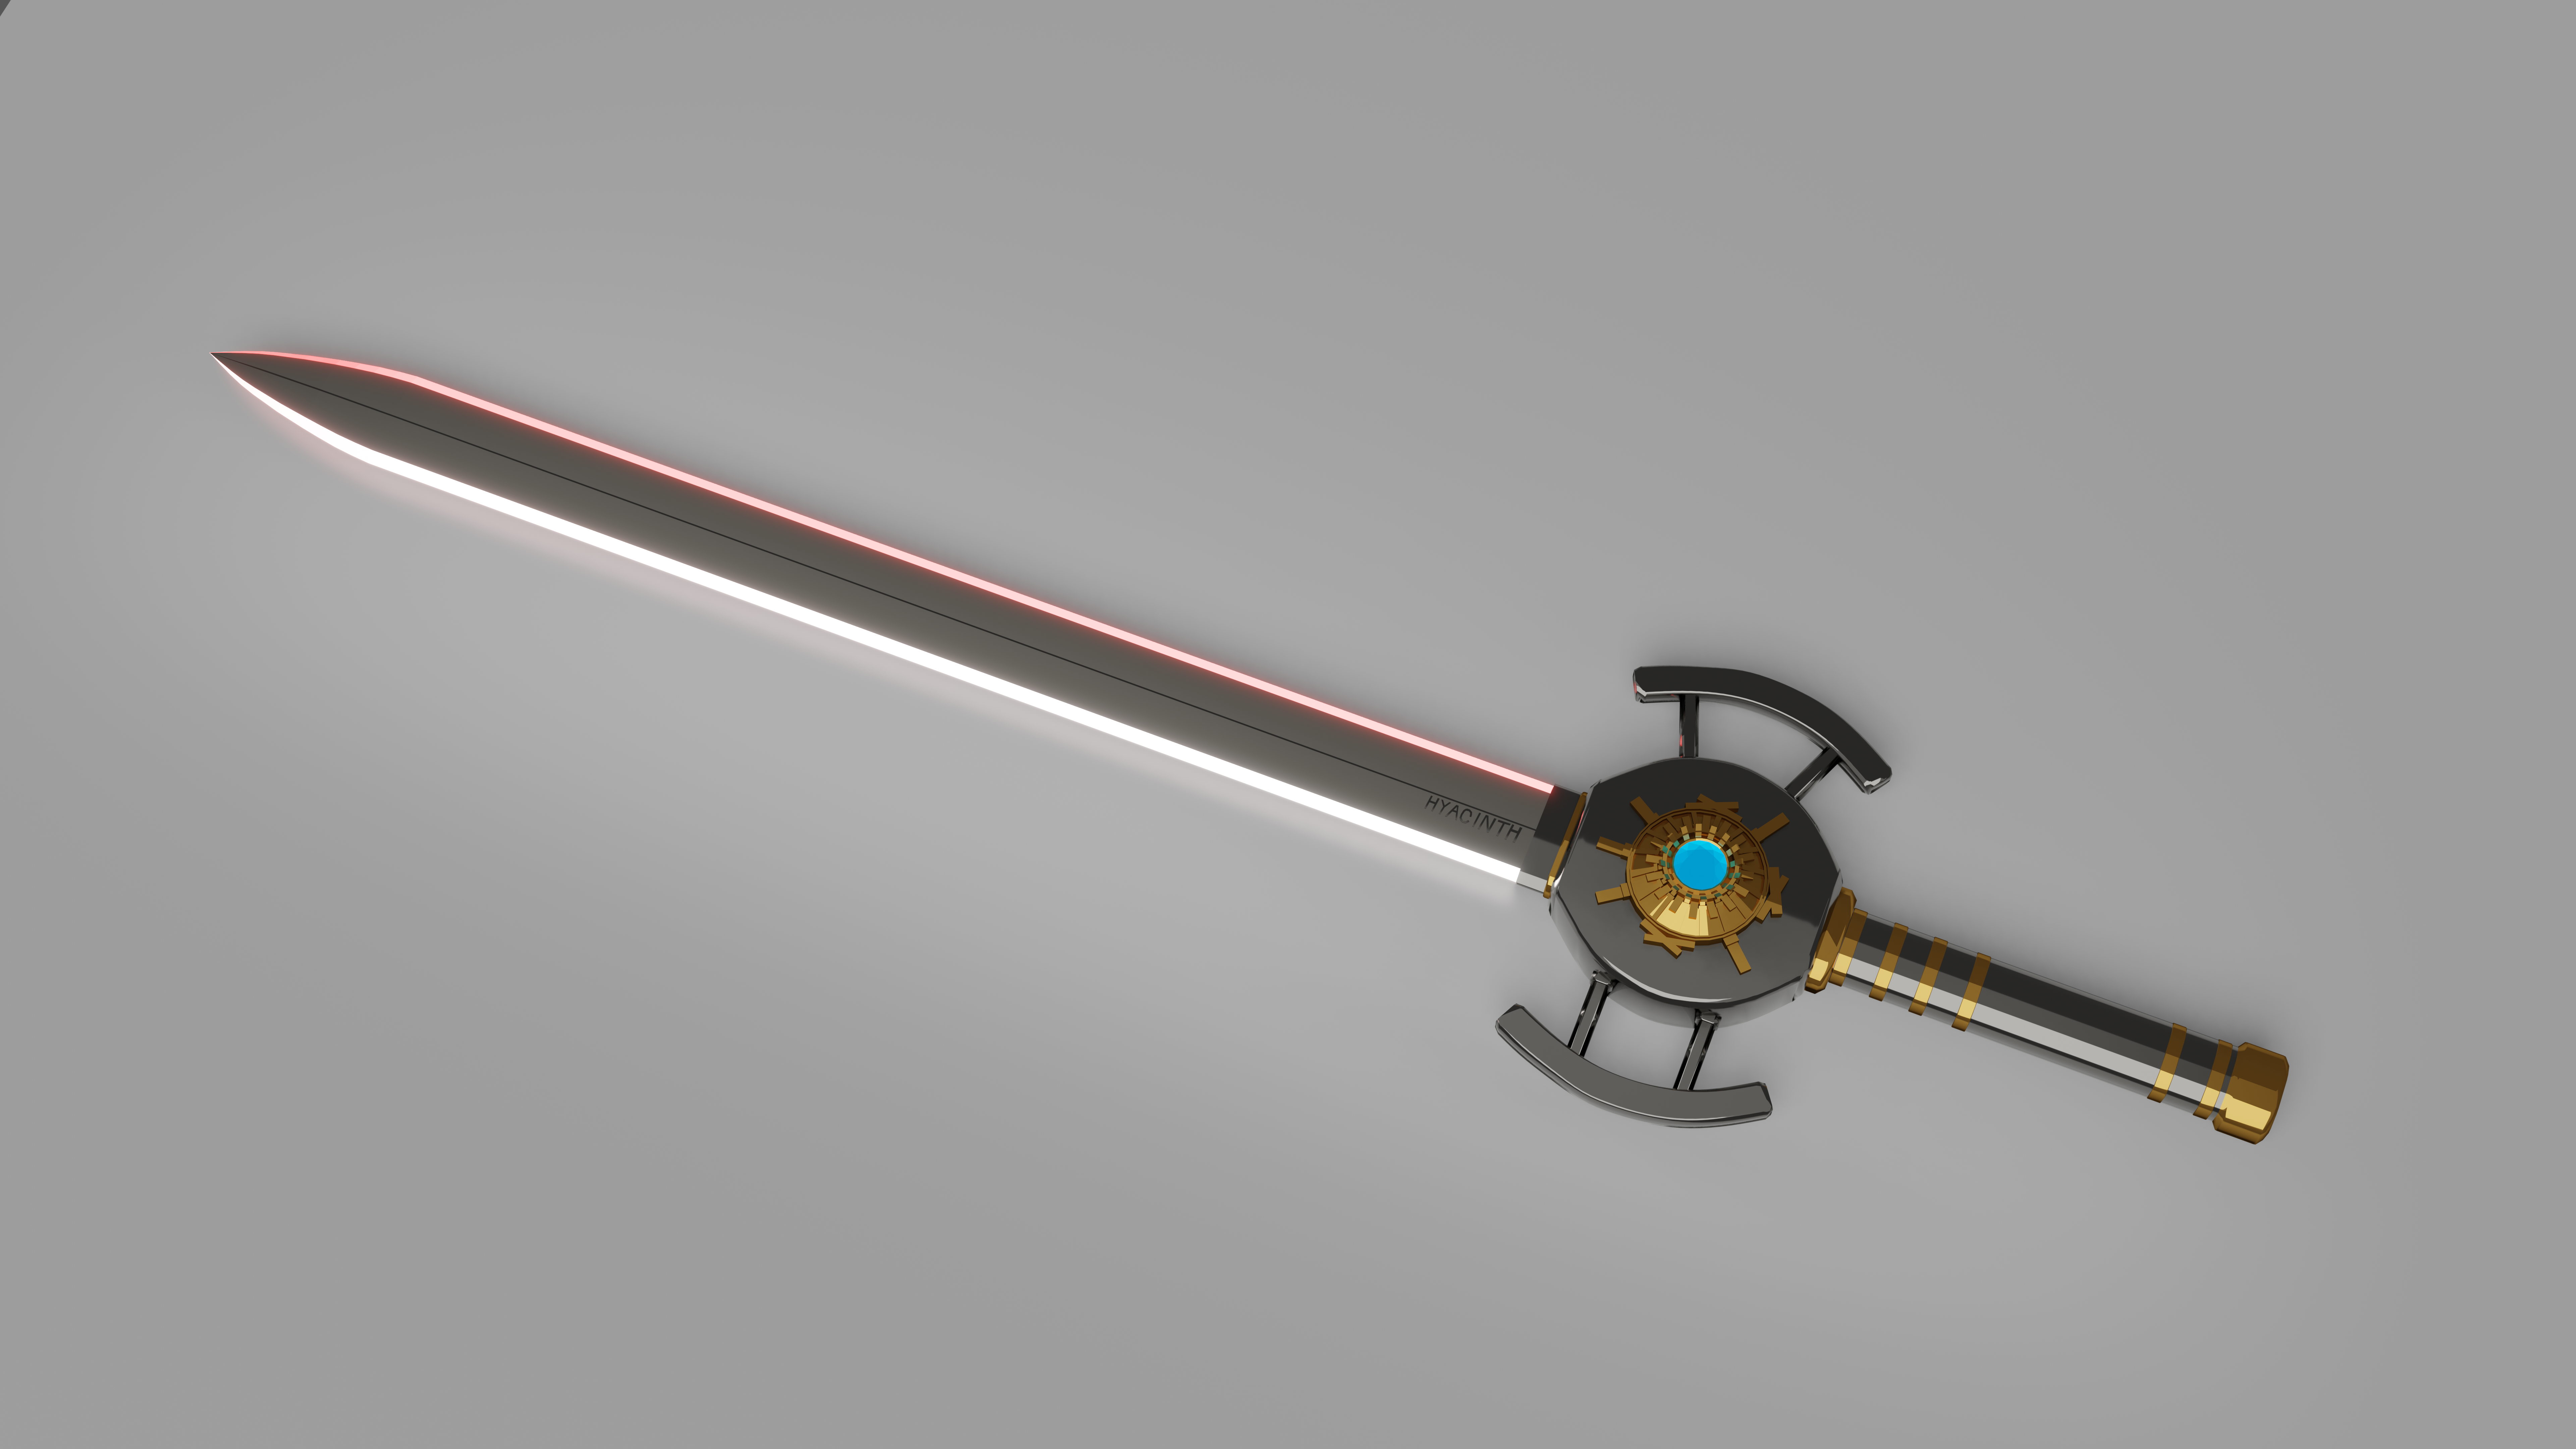 General 7680x4320 Blender sword weapon minimalism simple background CGI digital art